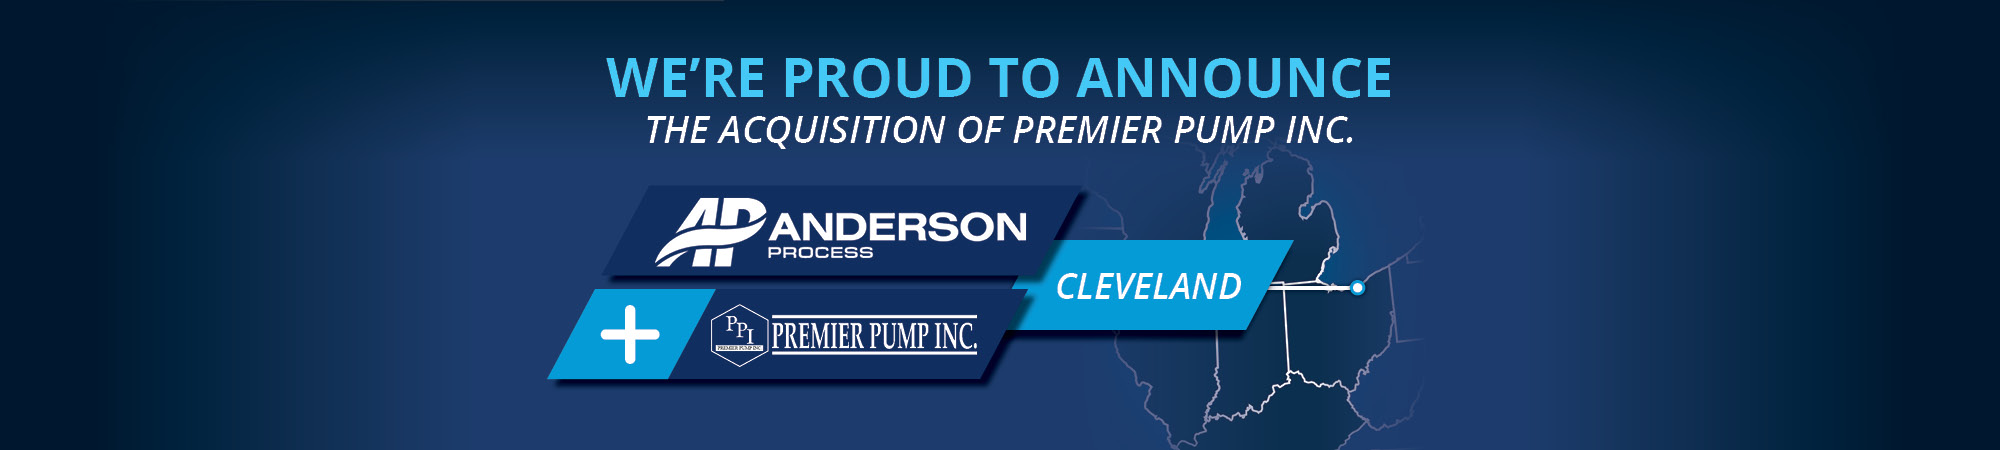 Anderson Process Acquires Premier Pump Inc.